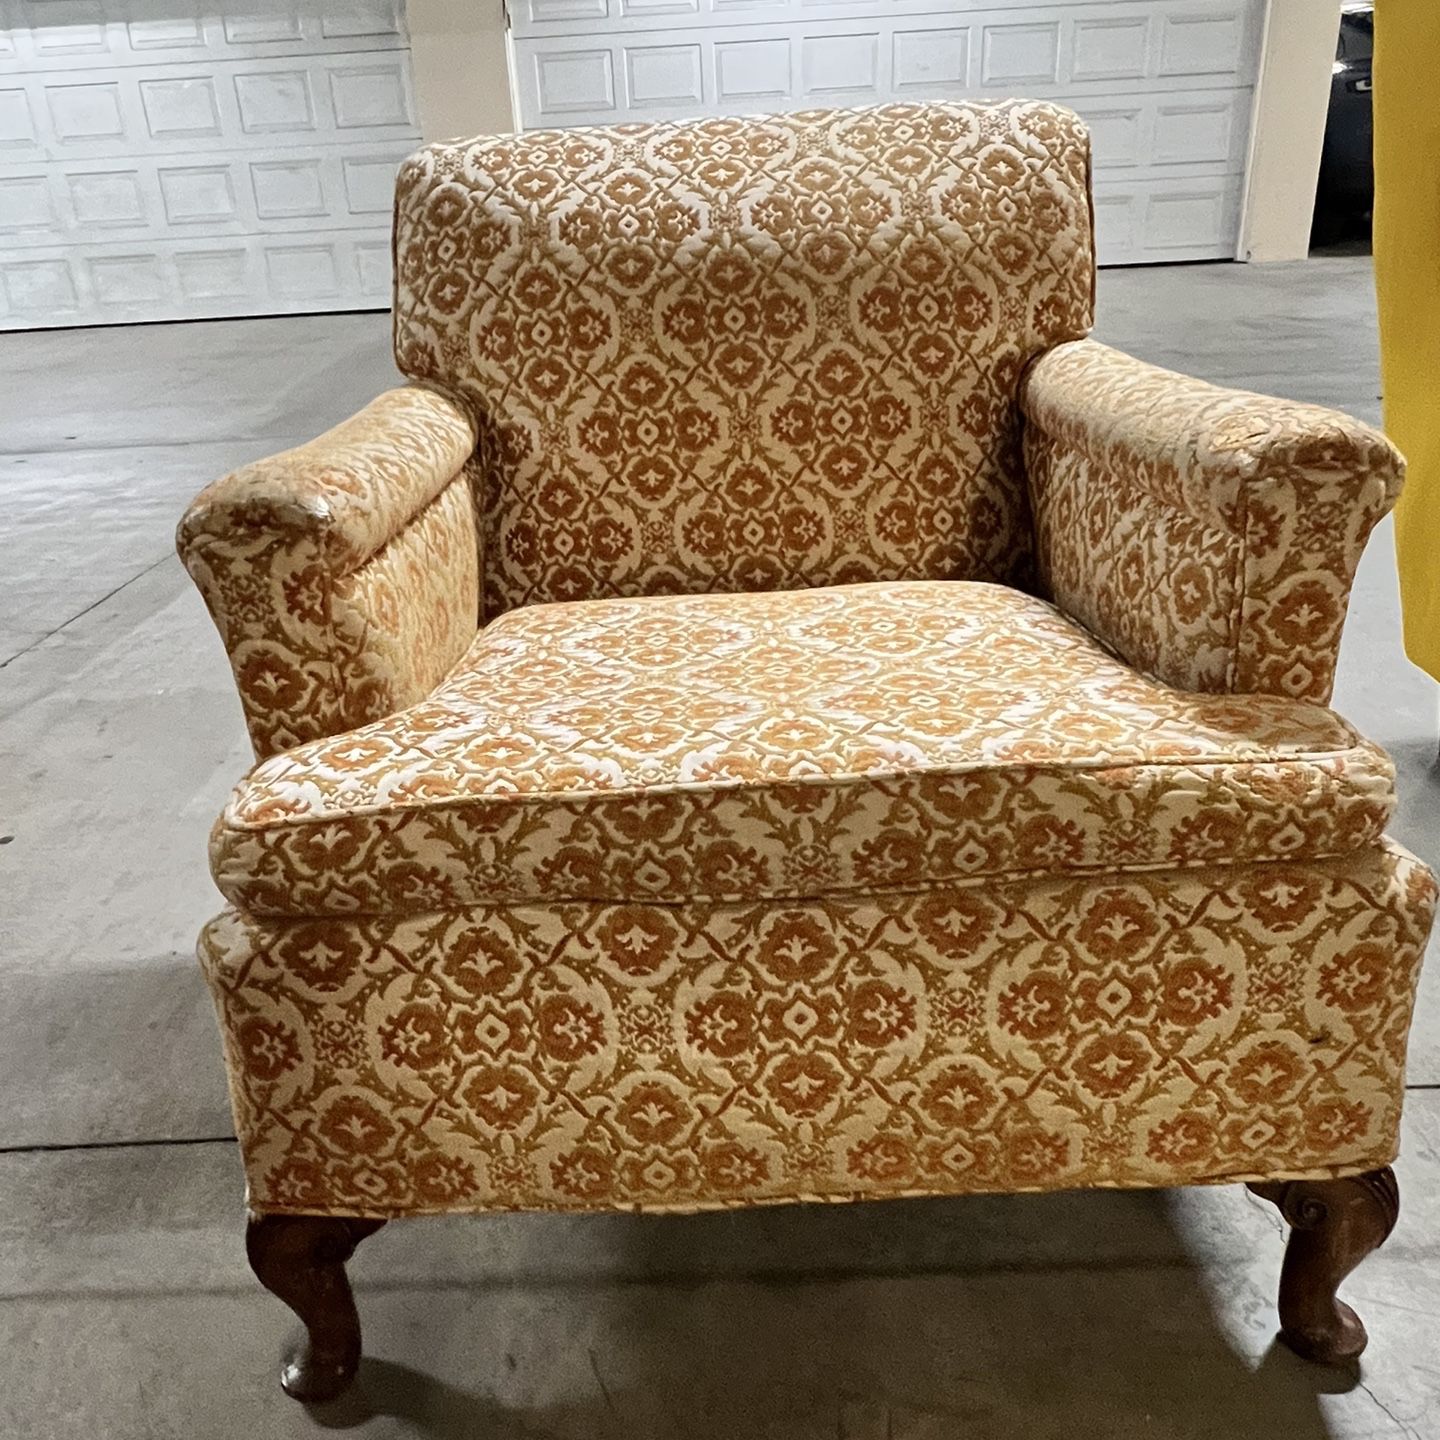 Vintage Chair, Jacquard Damask Fabric, Gold/Orange